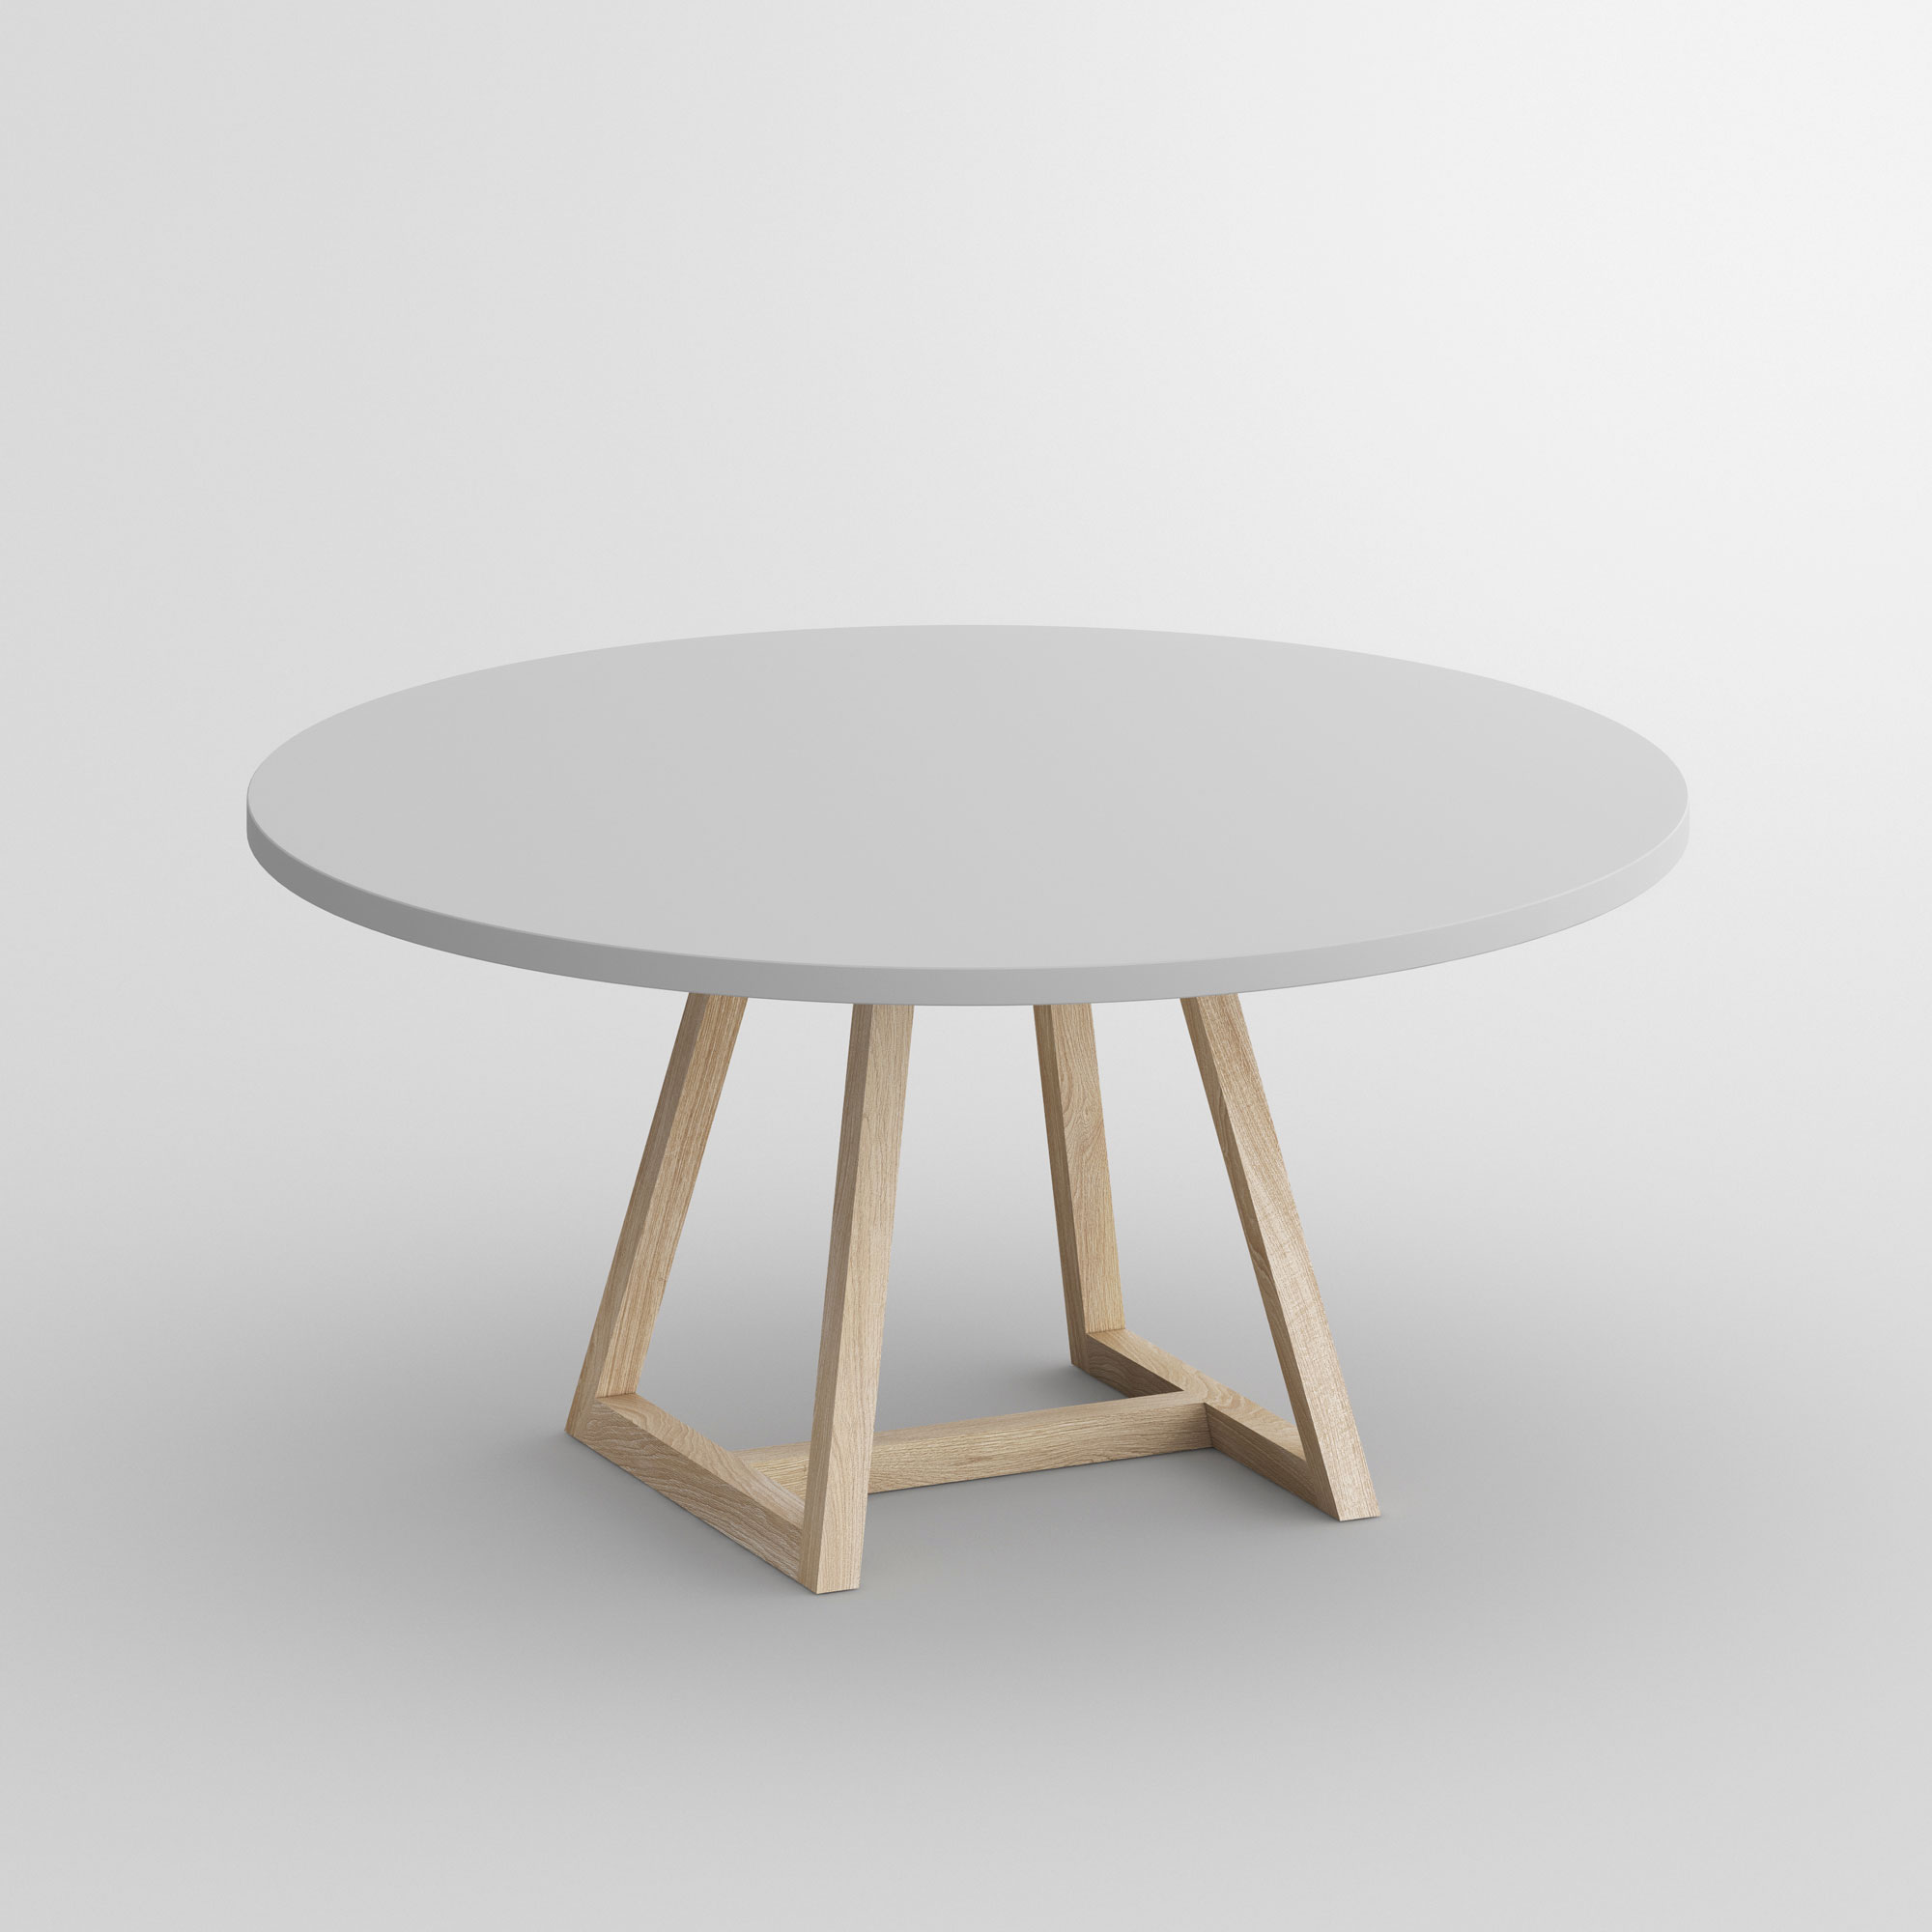 Round Linoleum Table MARGO ROUND LINO cam1 custom made in solid wood by vitamin design